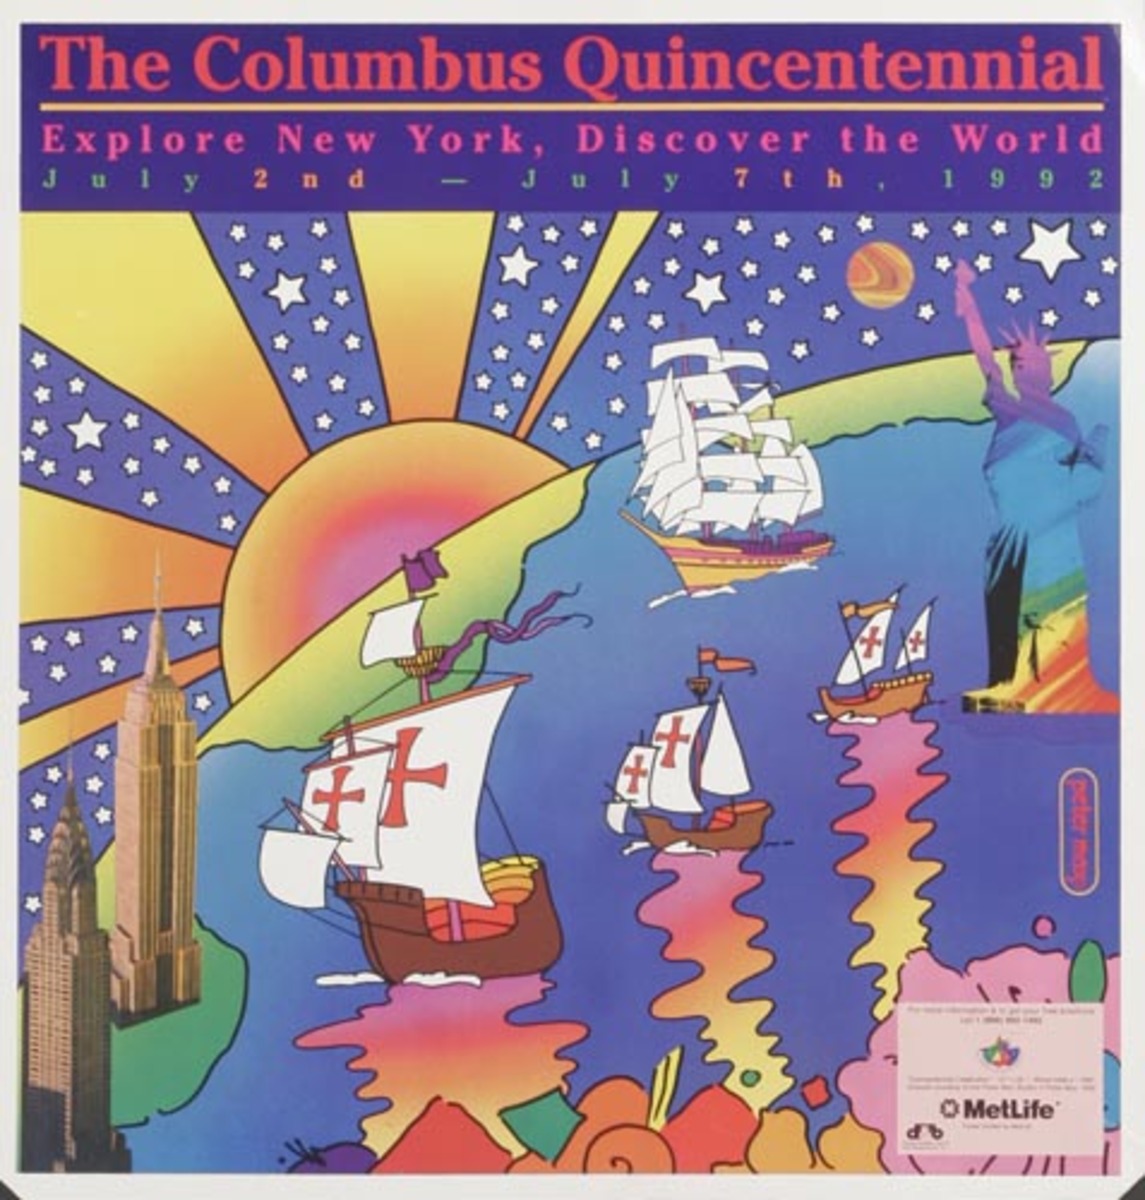 The Columbus Quincentennial Original Advertising Poster